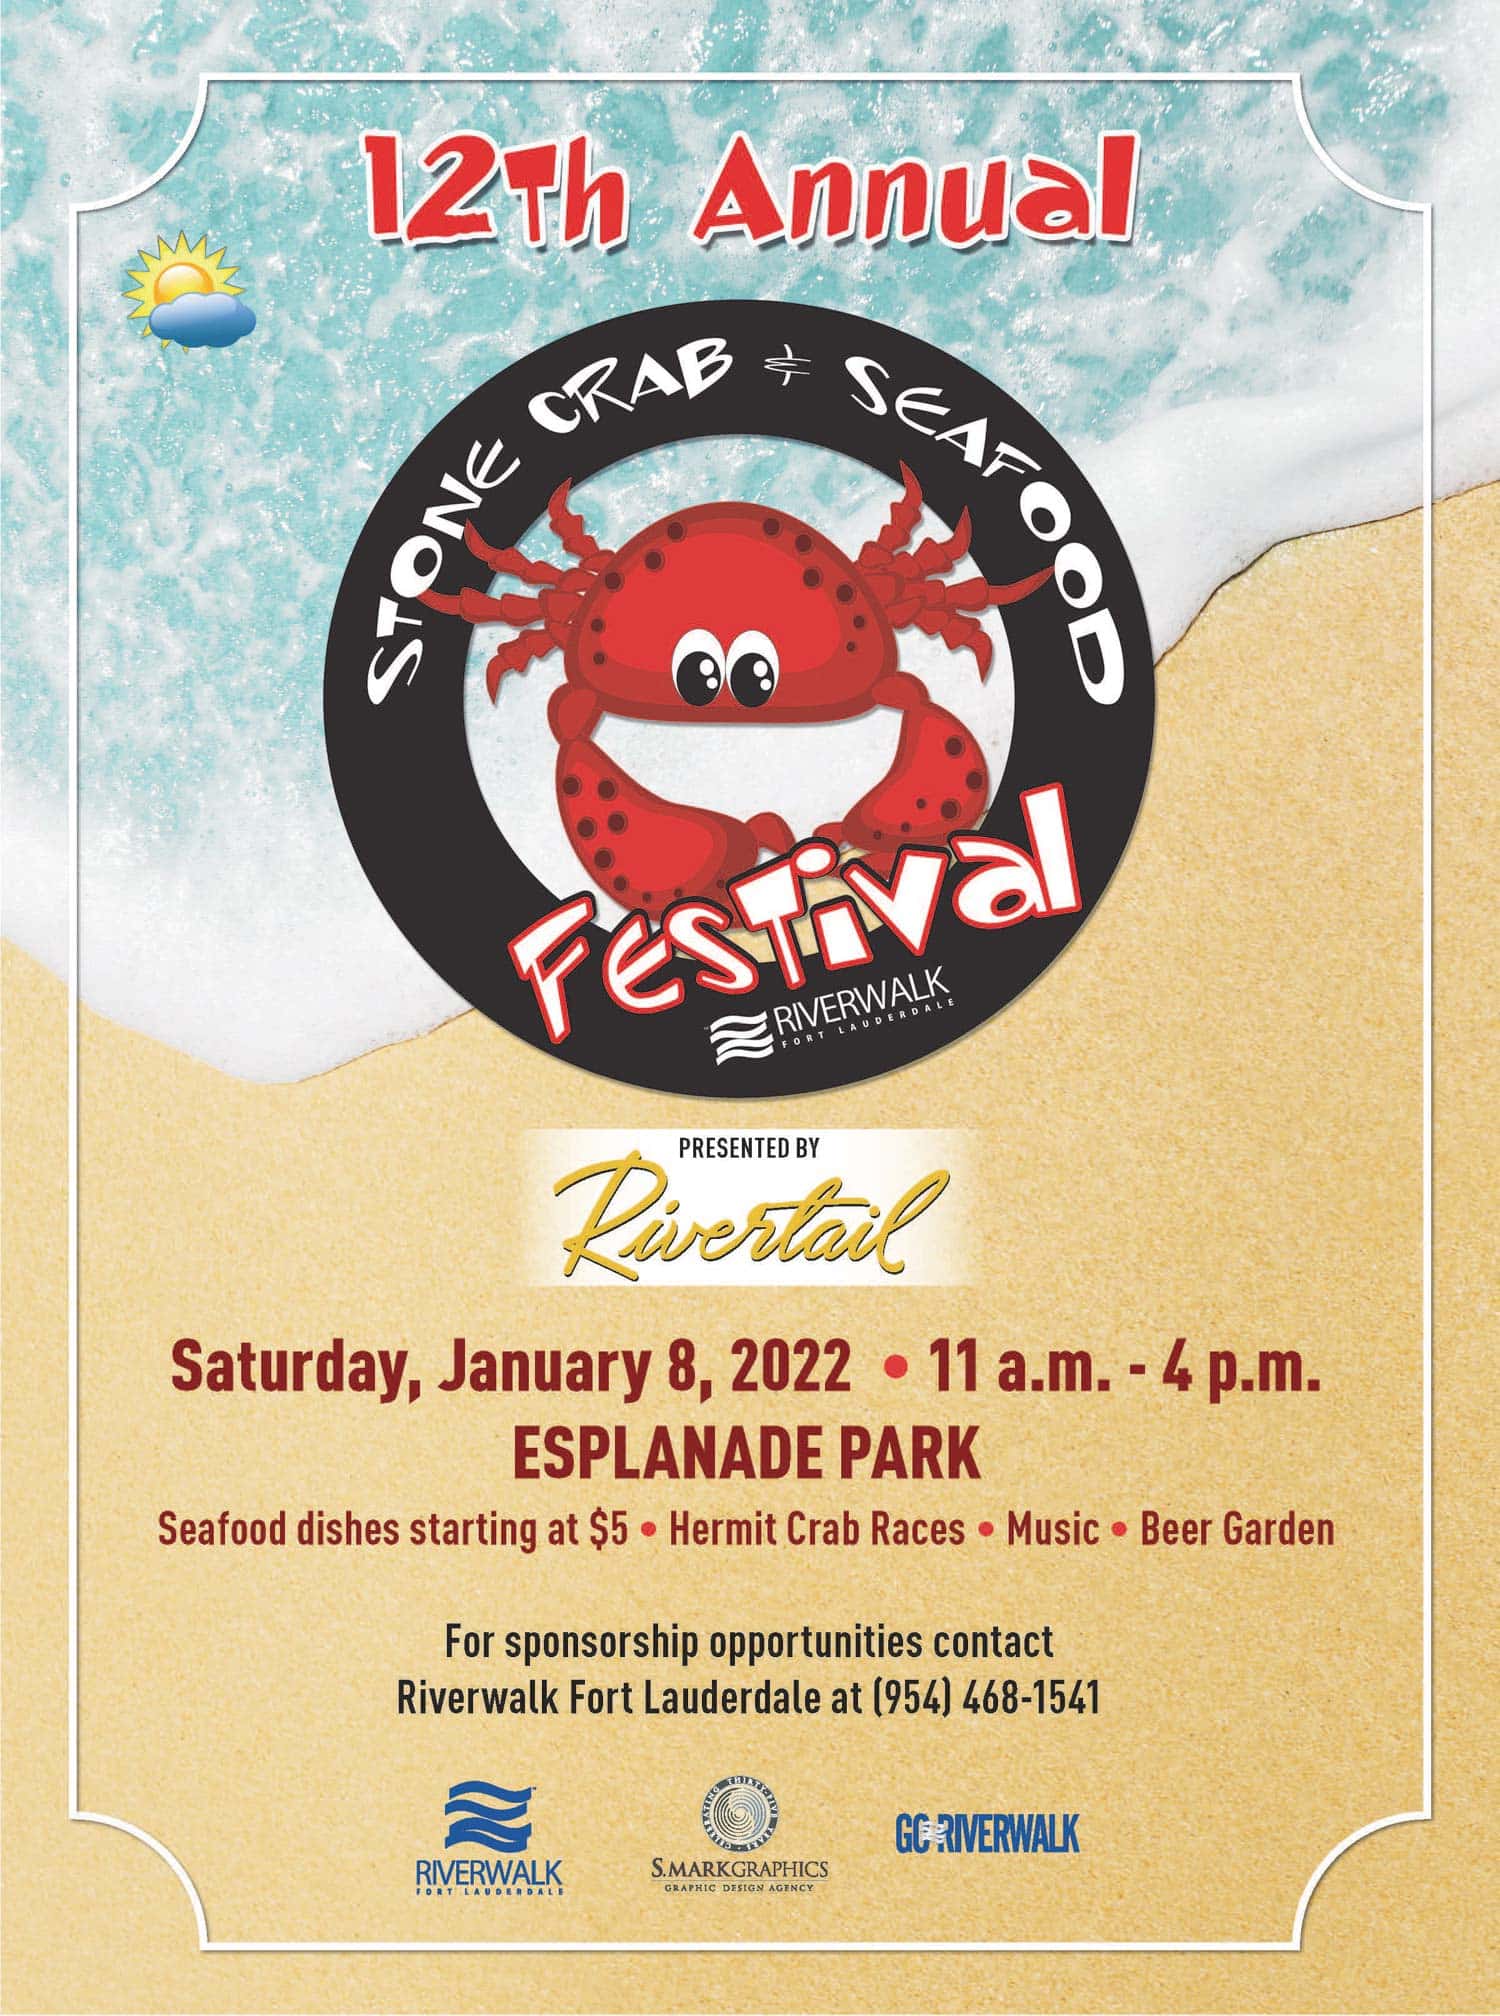 12th Annual Riverwalk Stone Crab & Seafood Festival - Jan 8th at 11am